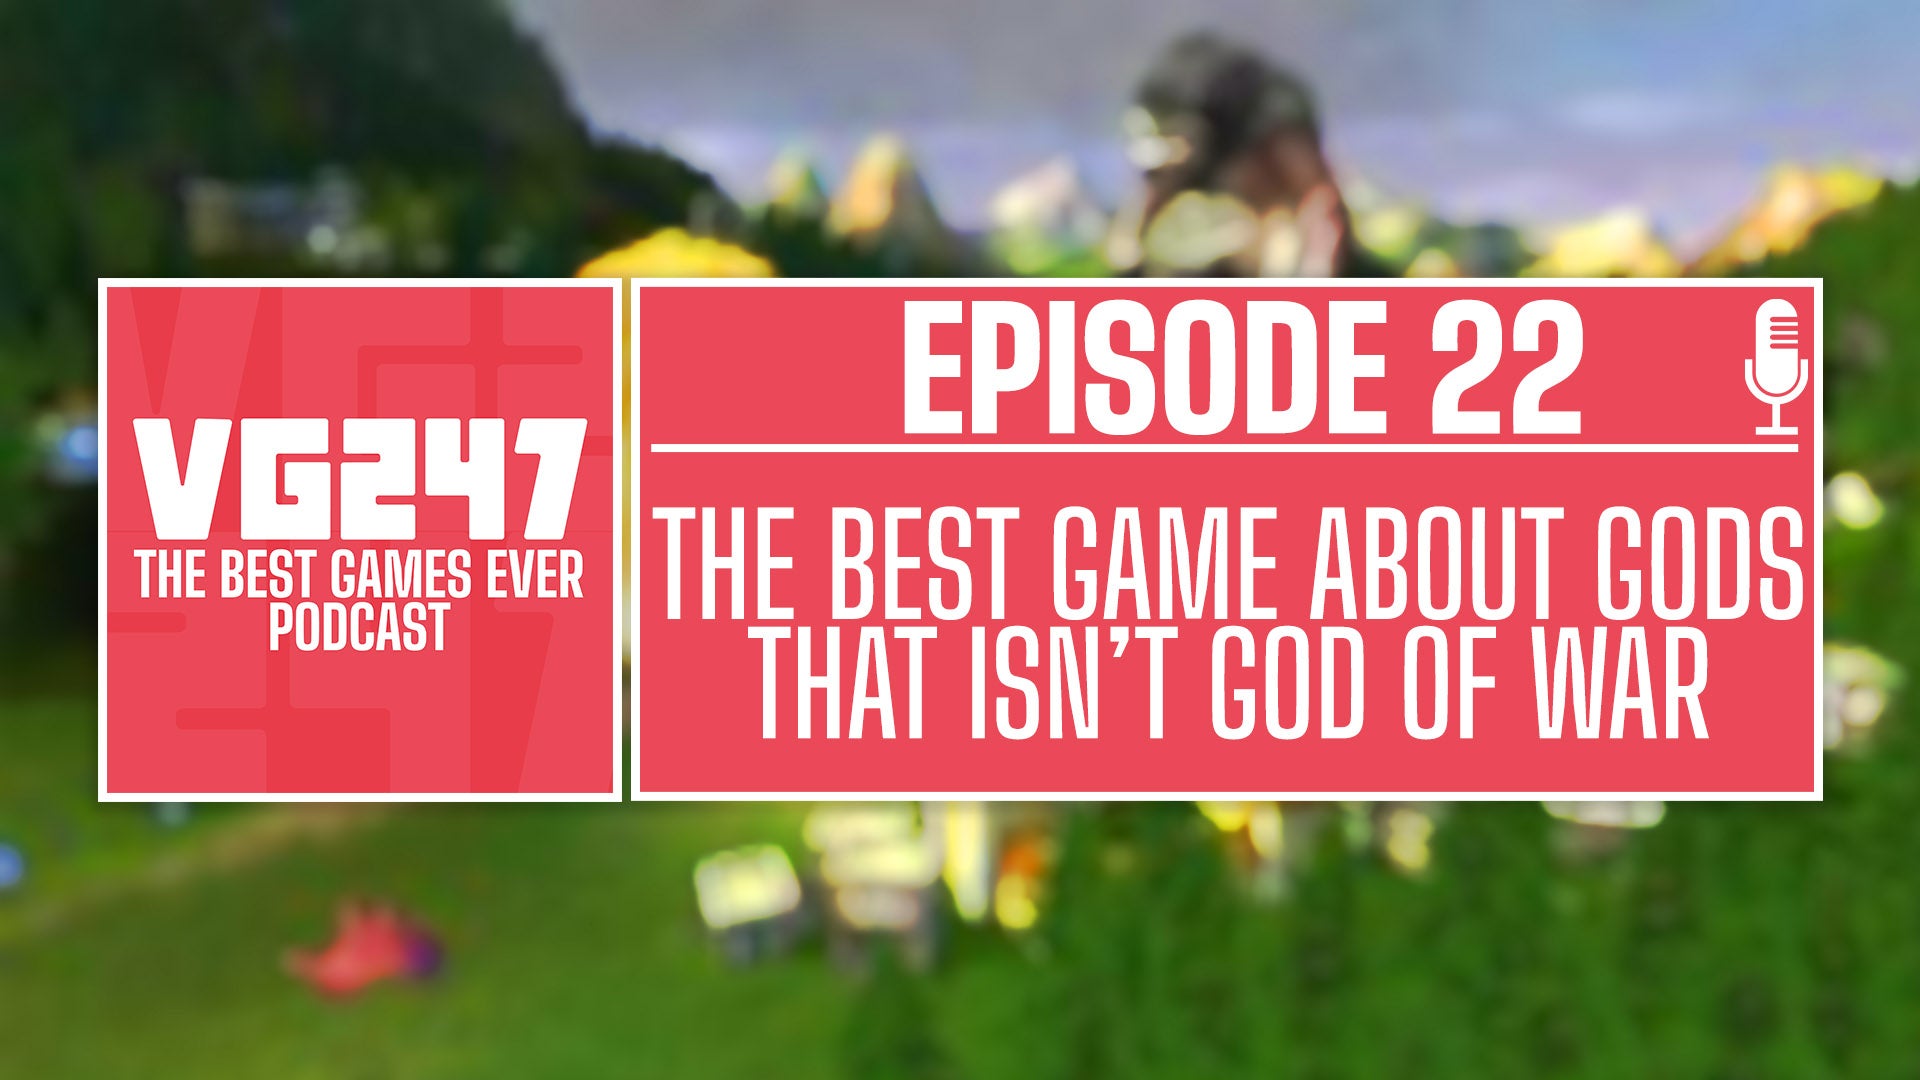 Best Games Ever Podcast header - Episode 22 - best game about gods that isn't God of War